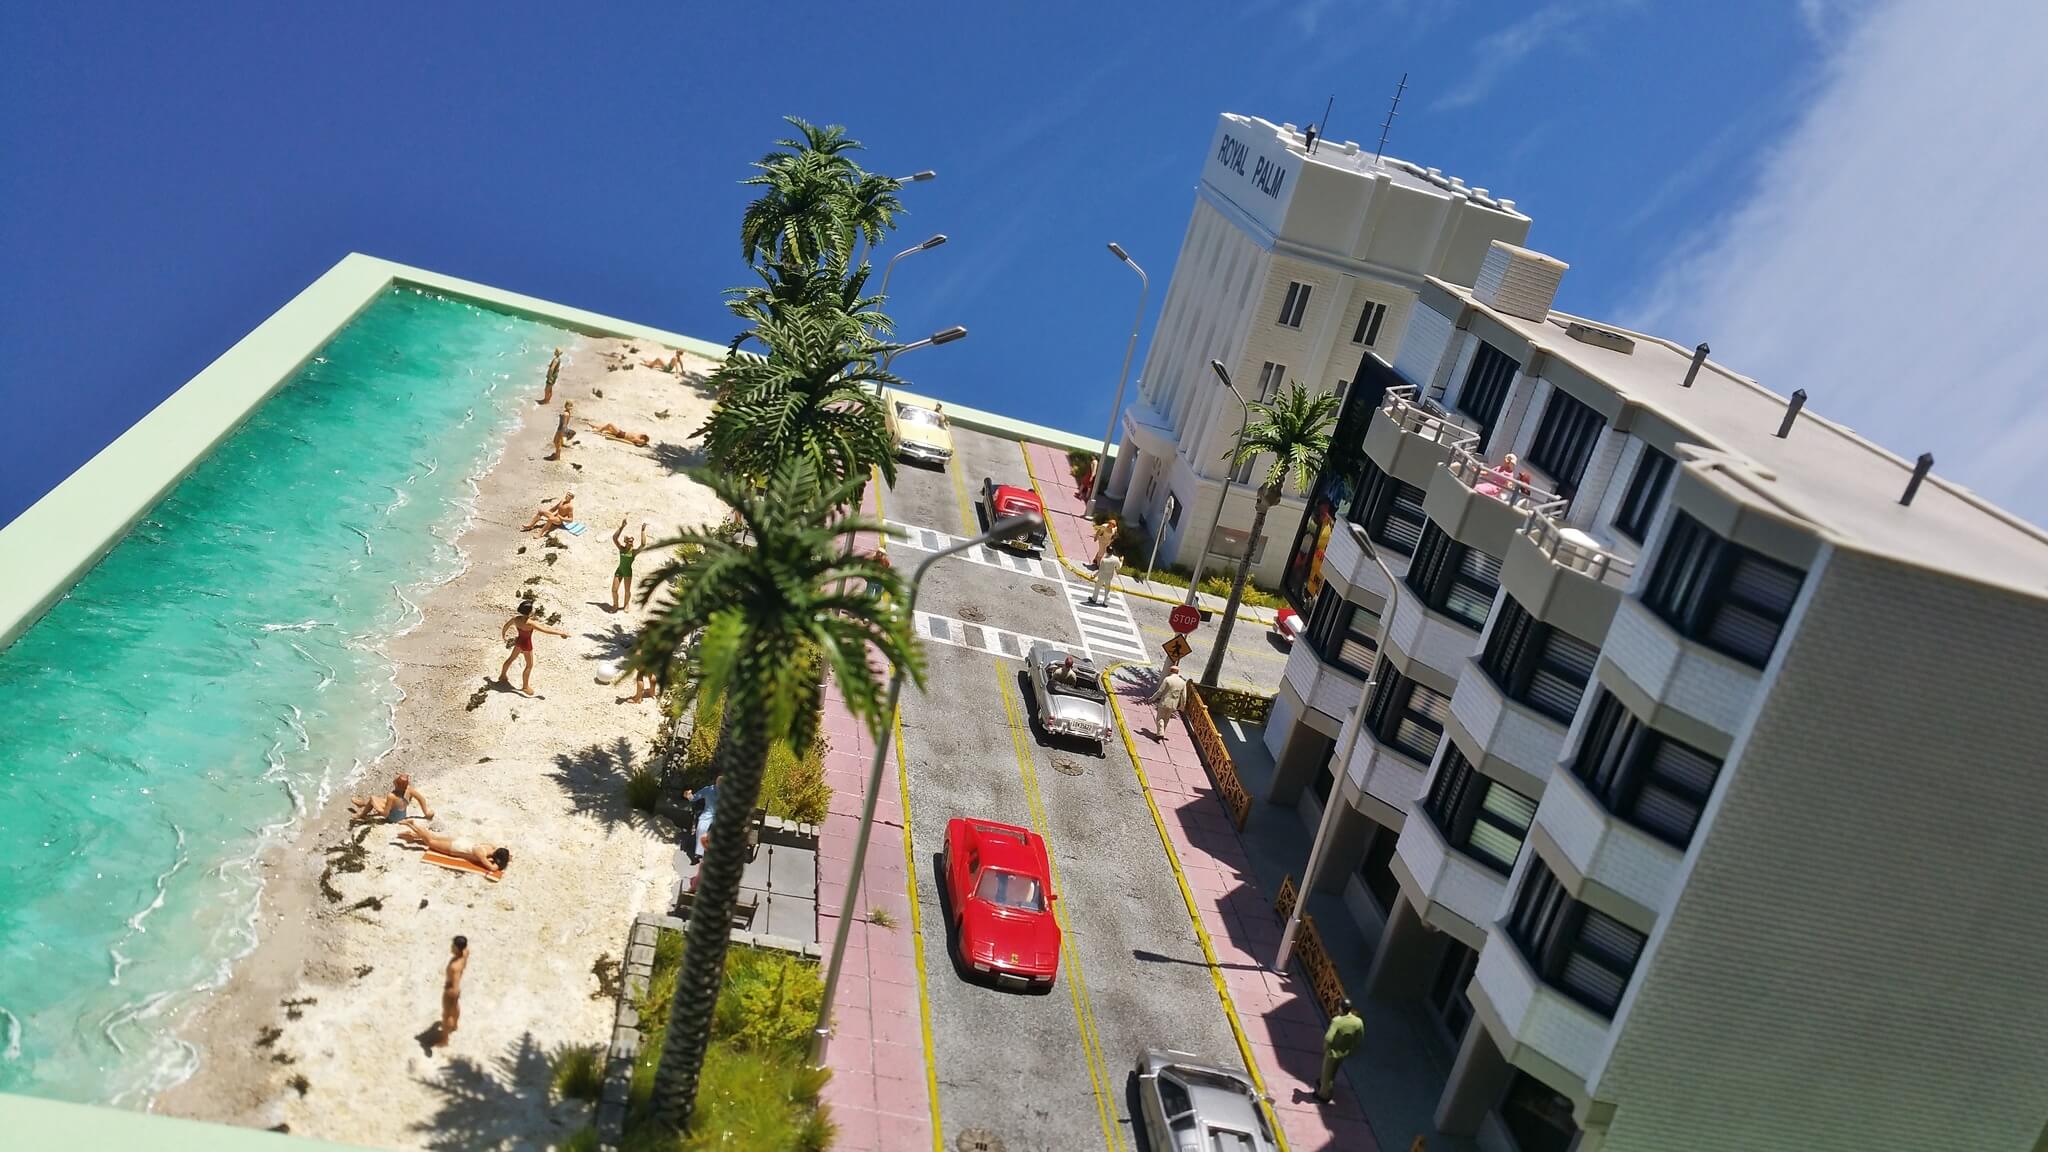 Diorama of miami hotels in scale